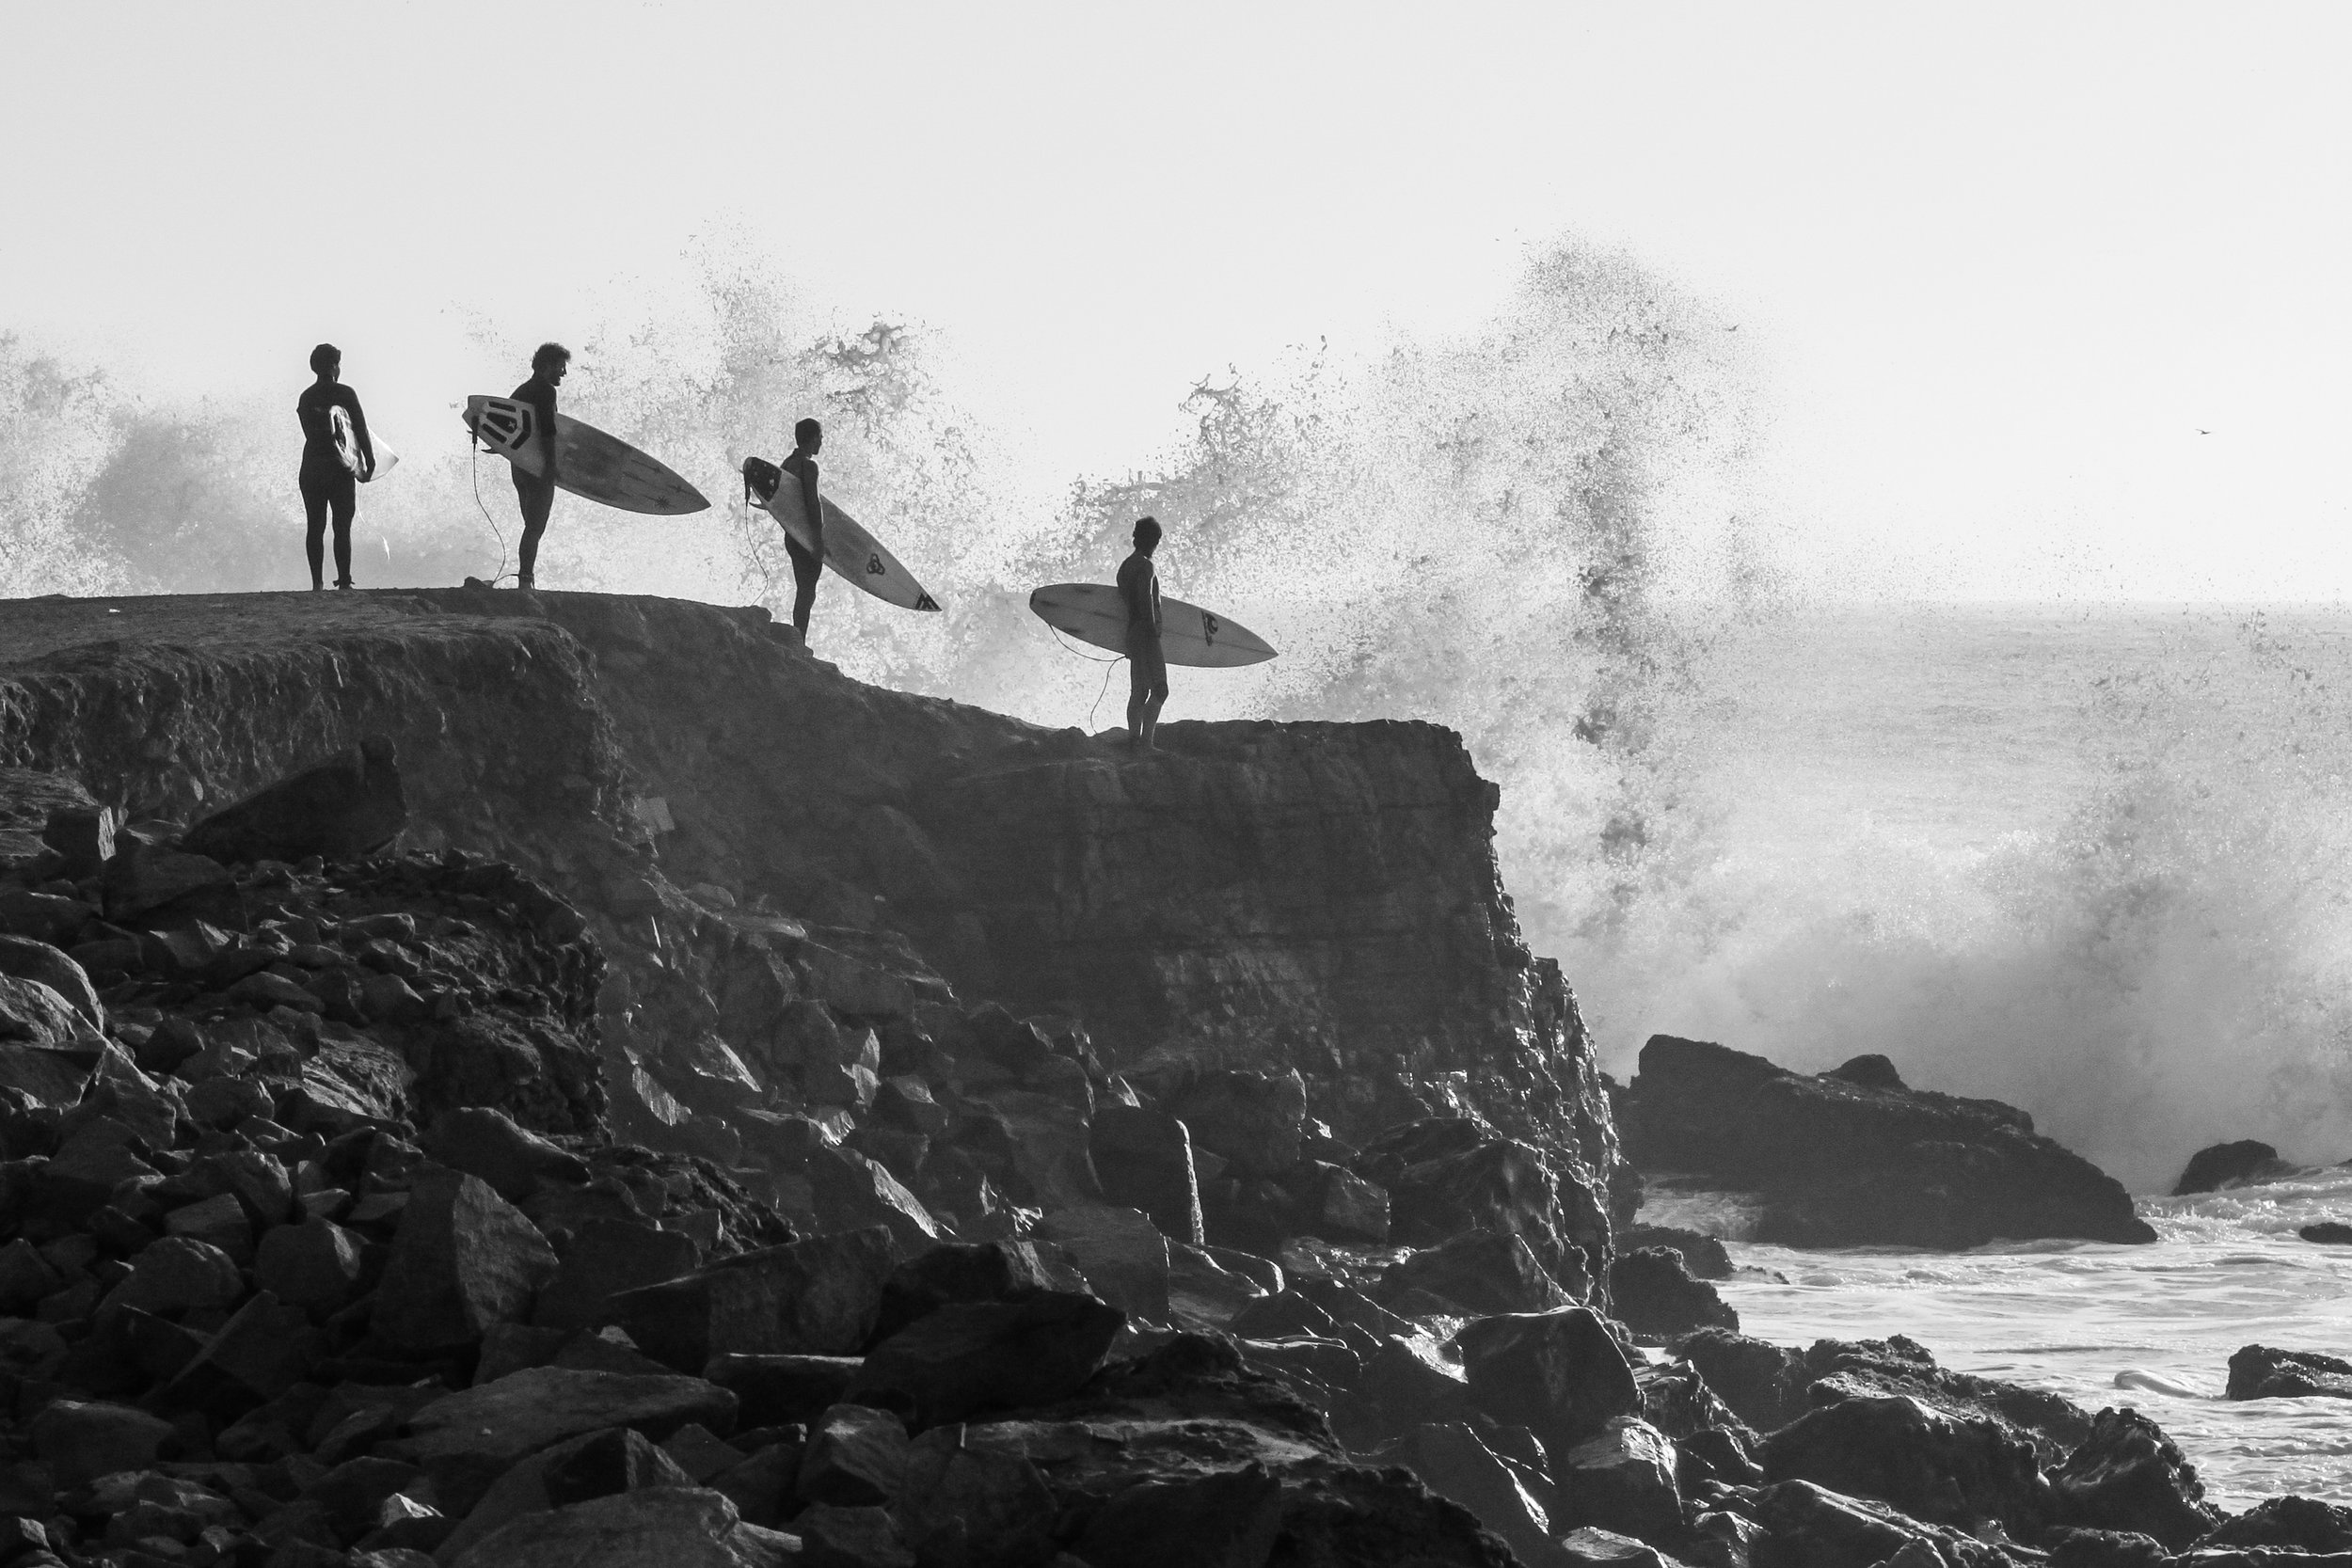 Surfers in Peru in black and white.